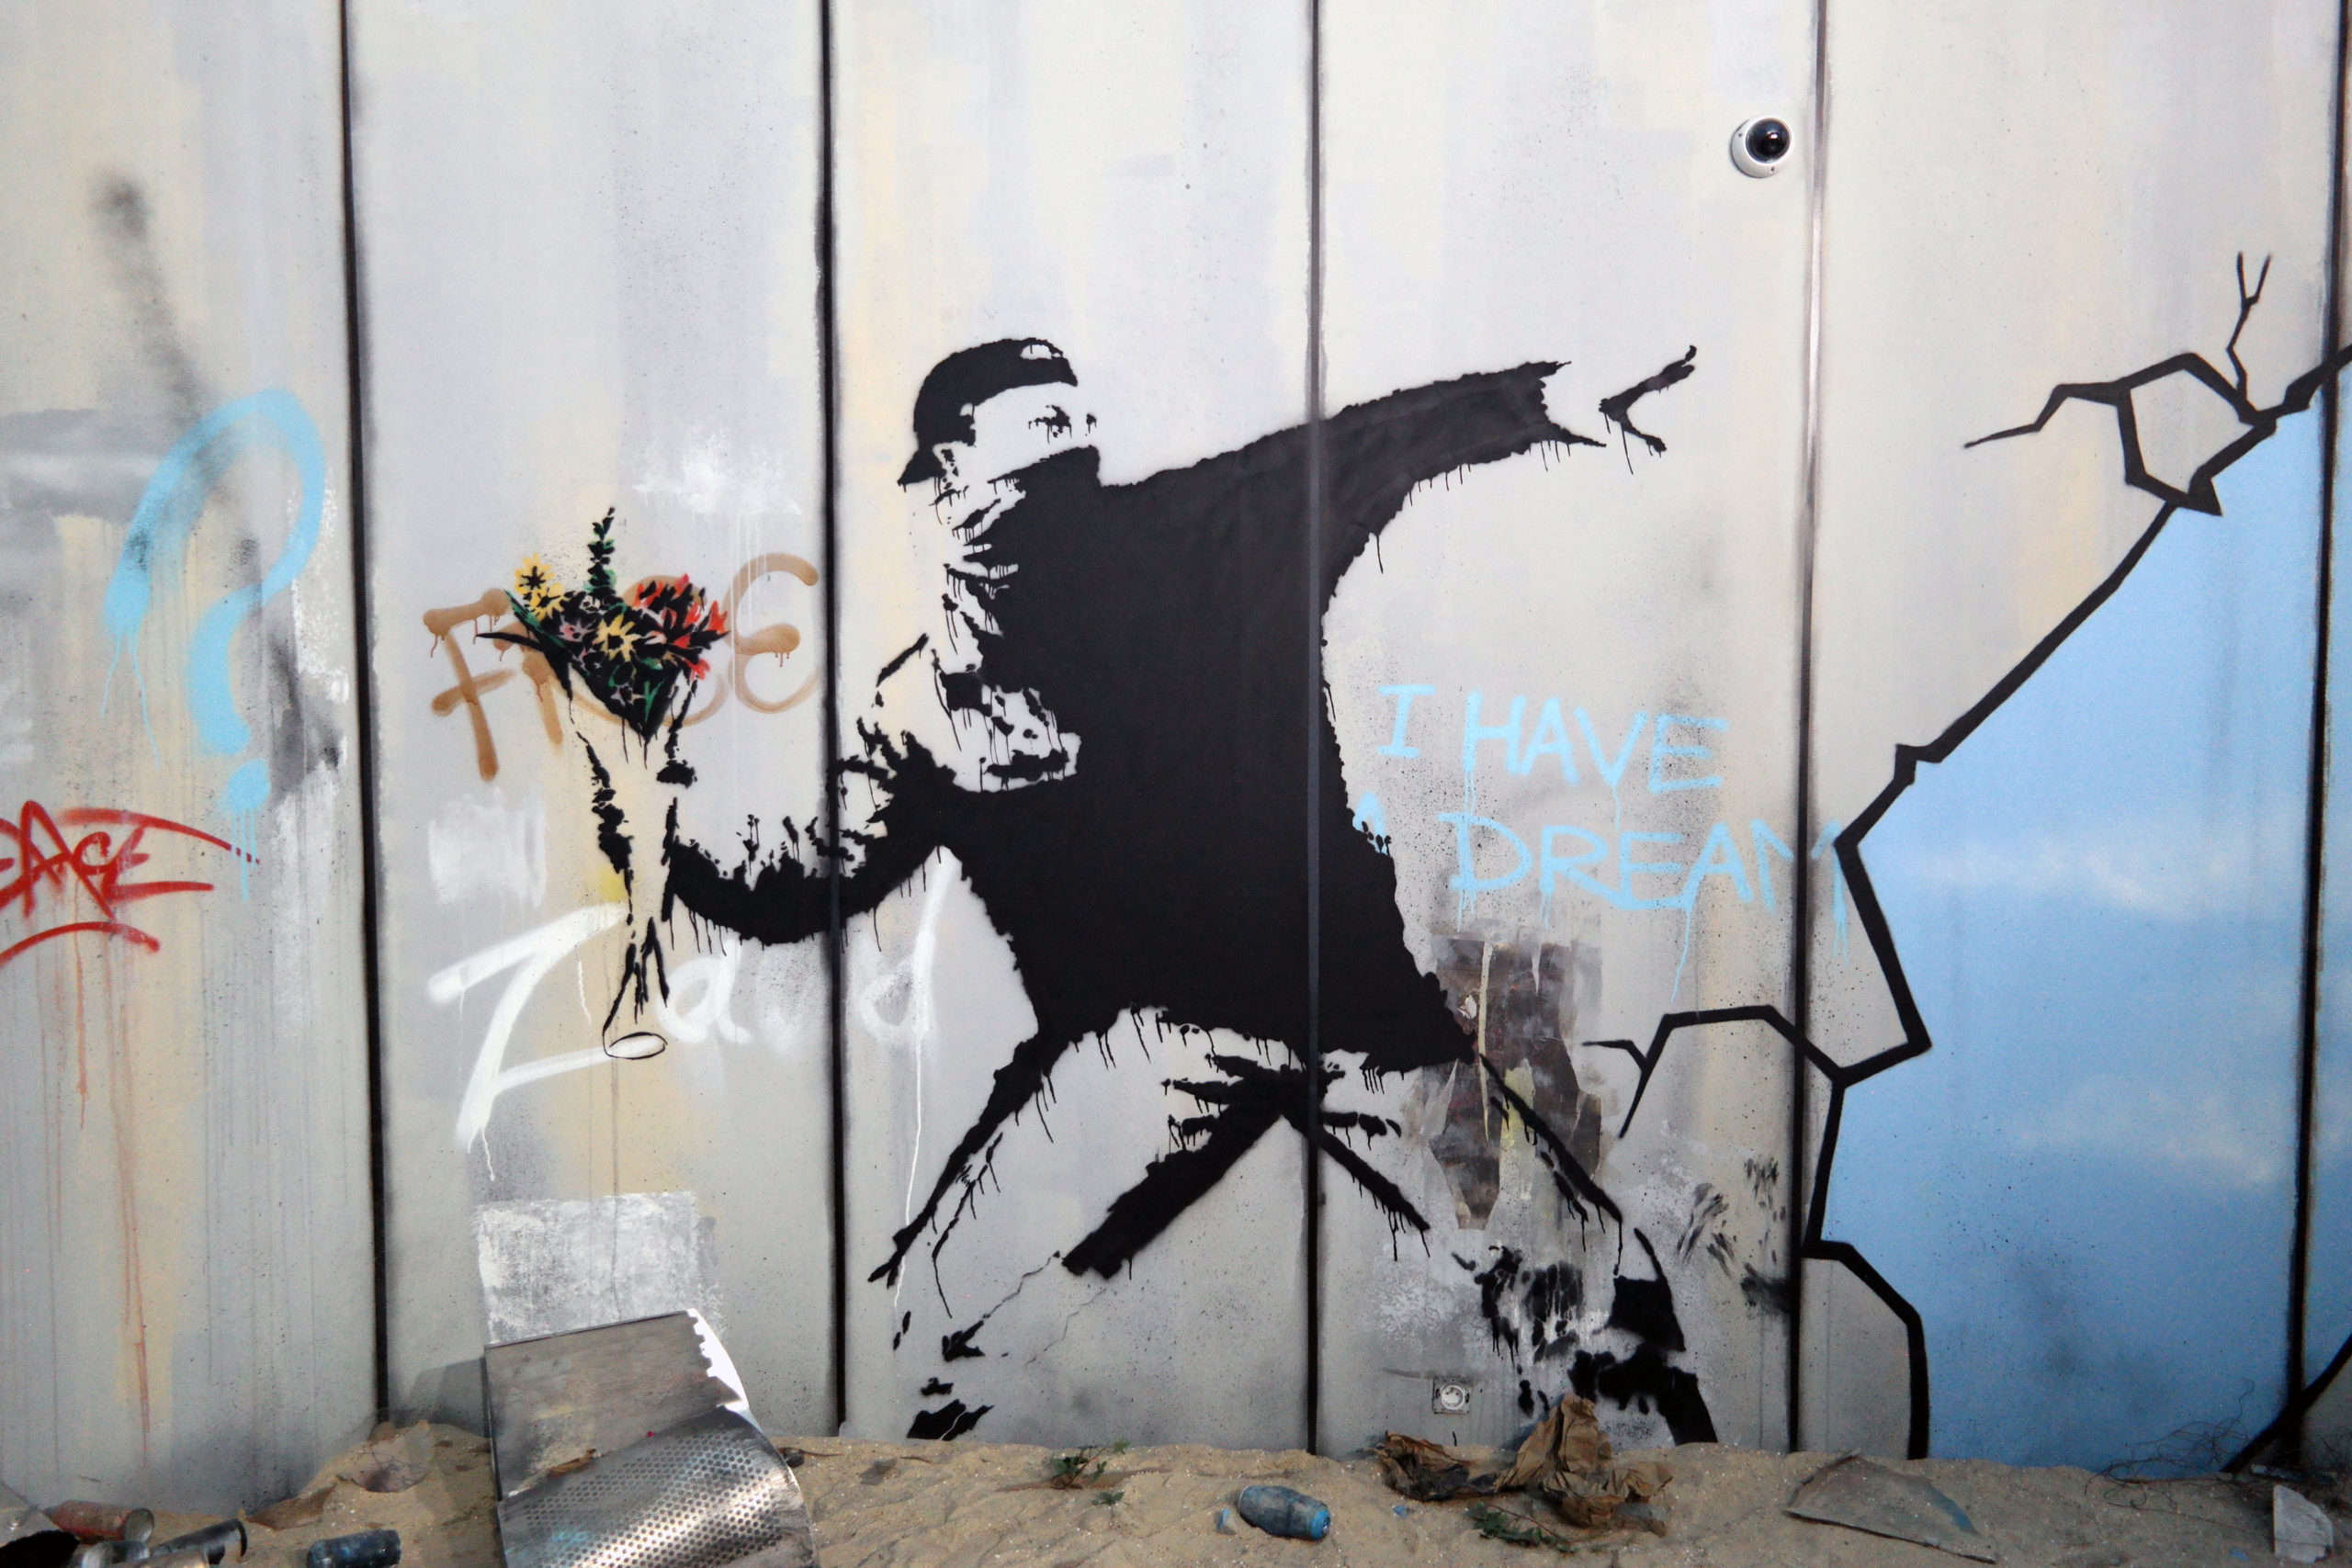 Rage, Flower Thrower, Banksy Poster  Banksy graffiti, Arte urbano banksy,  Banksy